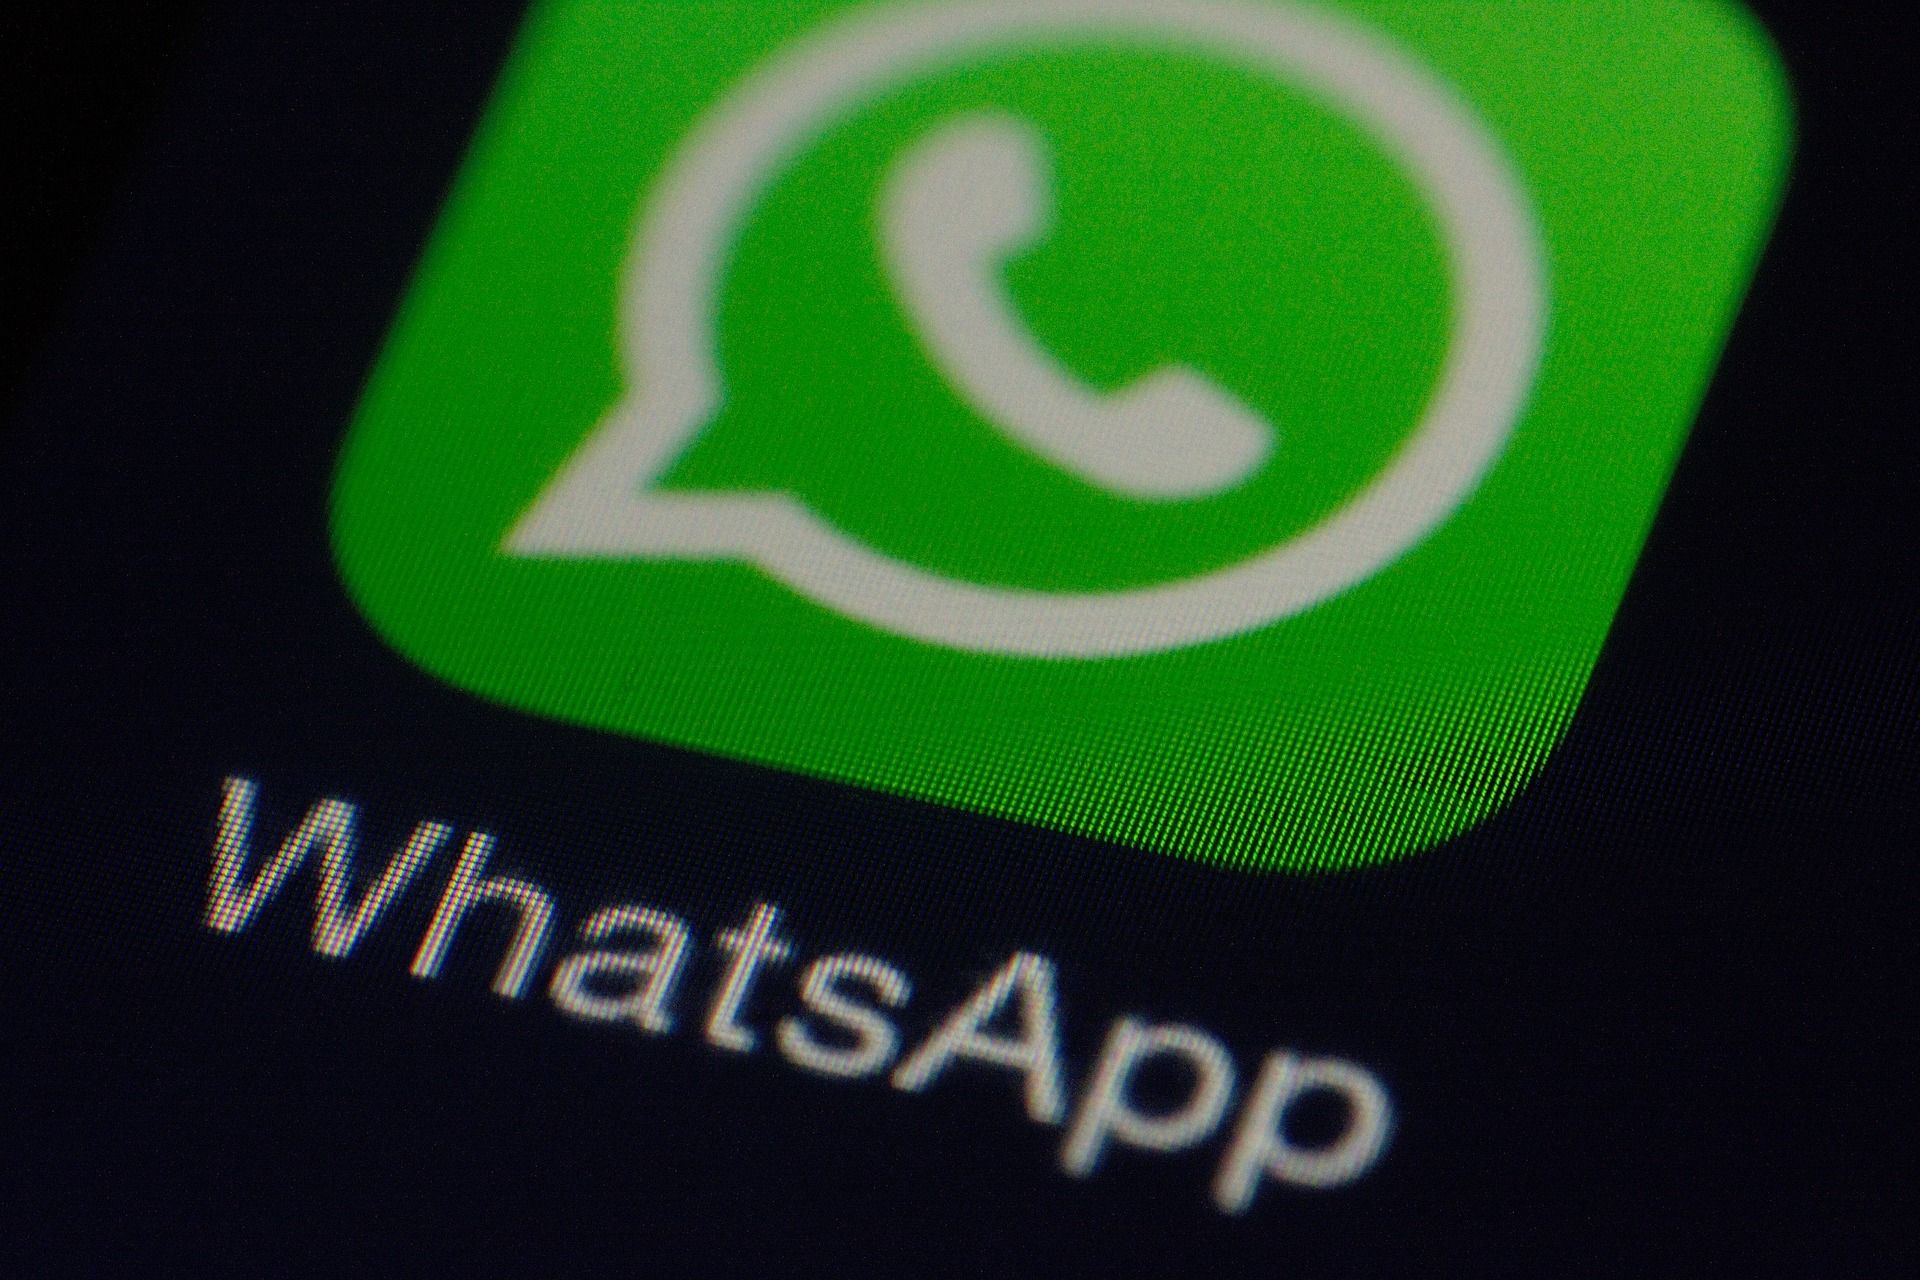 WhatsApp memperkenalkan fitur proxy baru yang akan tersedia di seluruh dunia yang akan memungkinkan para sukarelawan dan organisasi untuk mengatur server proxy WhatsApp.